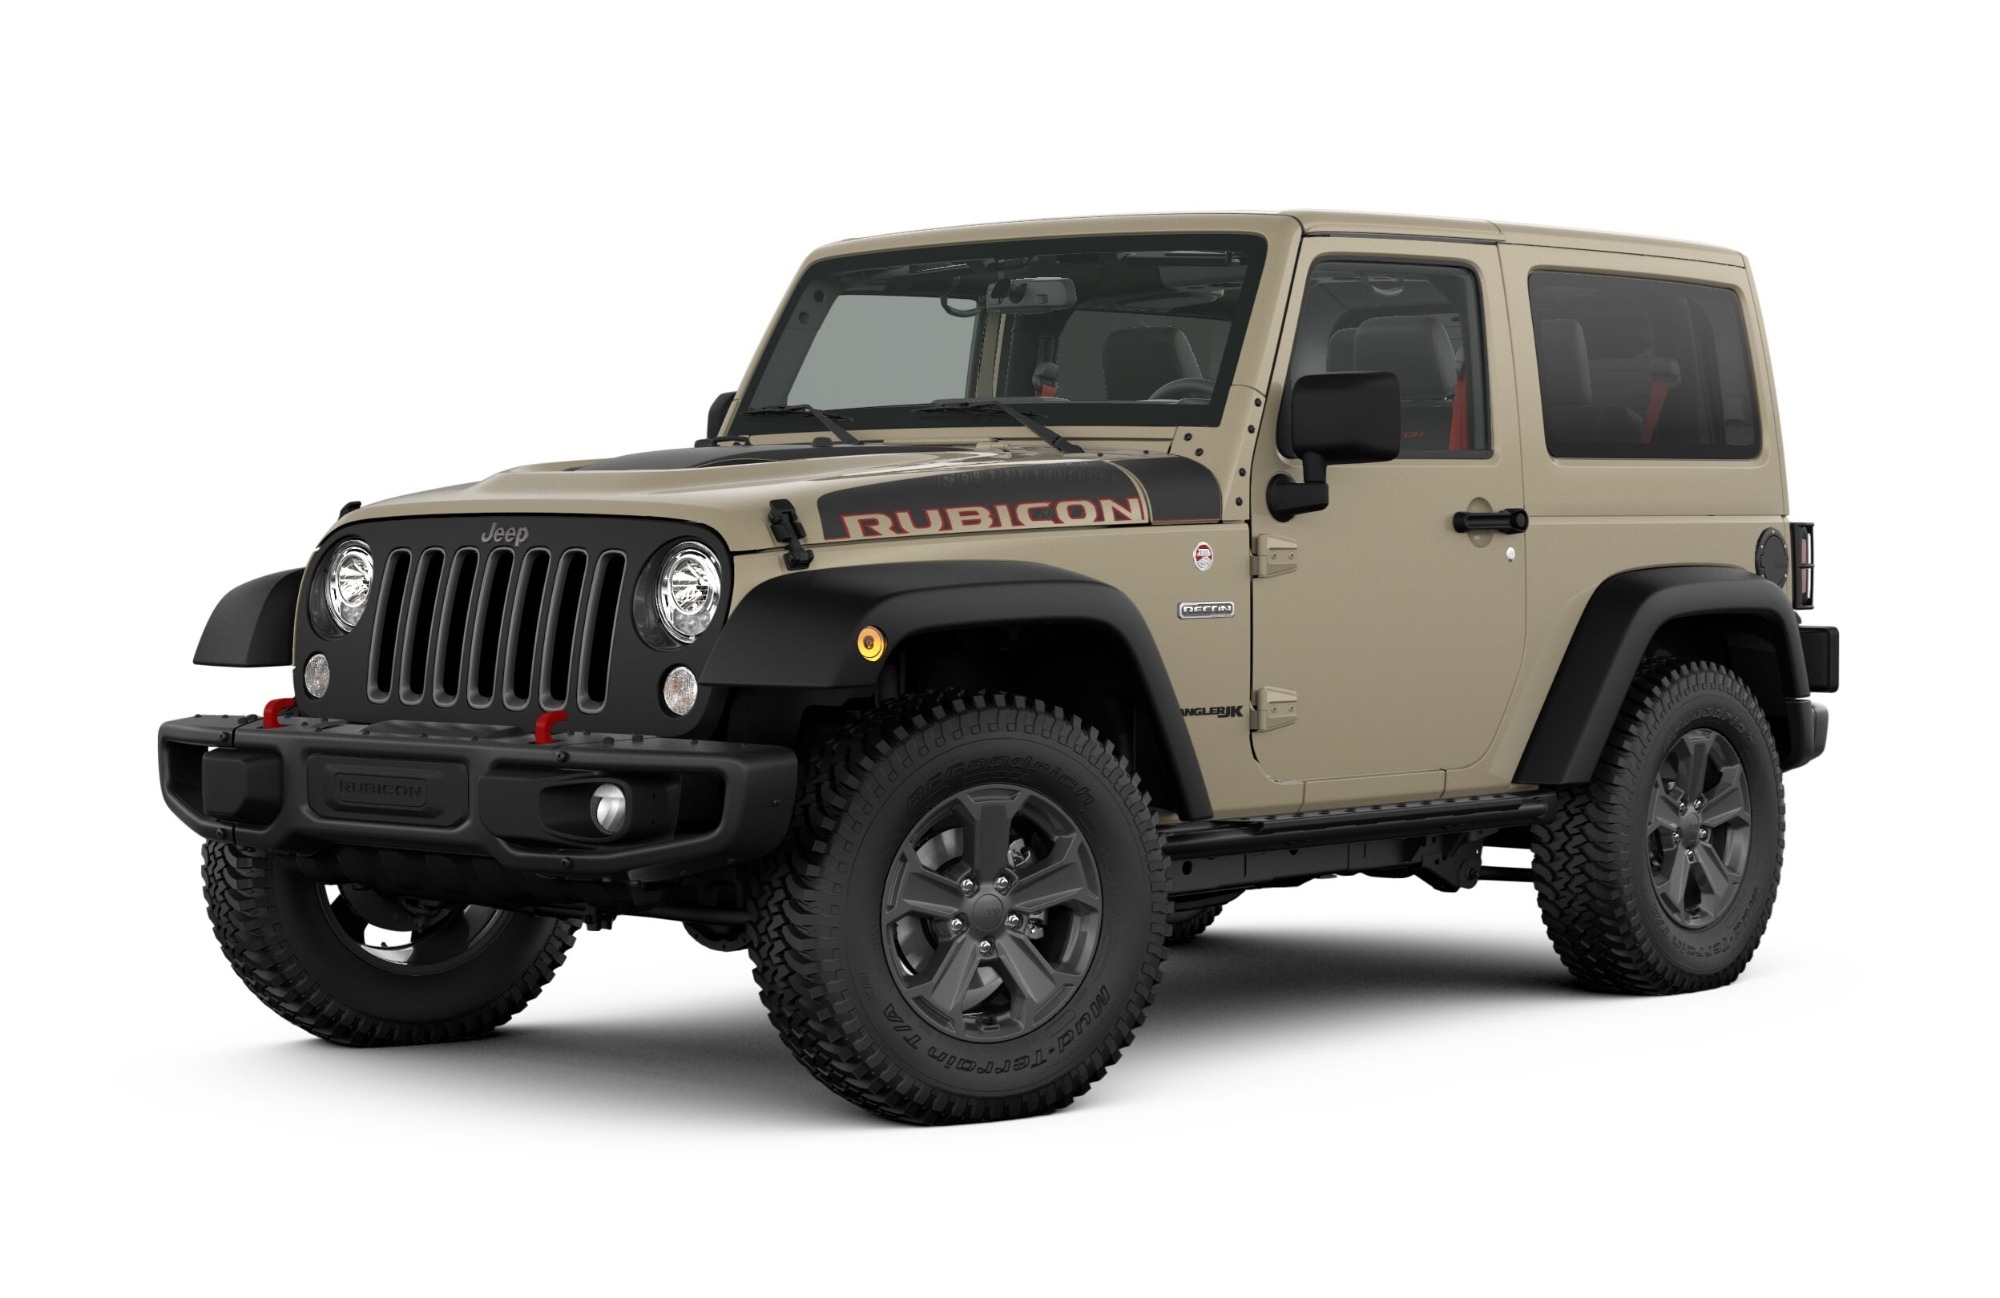 2018 Jeep Wrangler JK Rubicon Recon Full Specs, Features